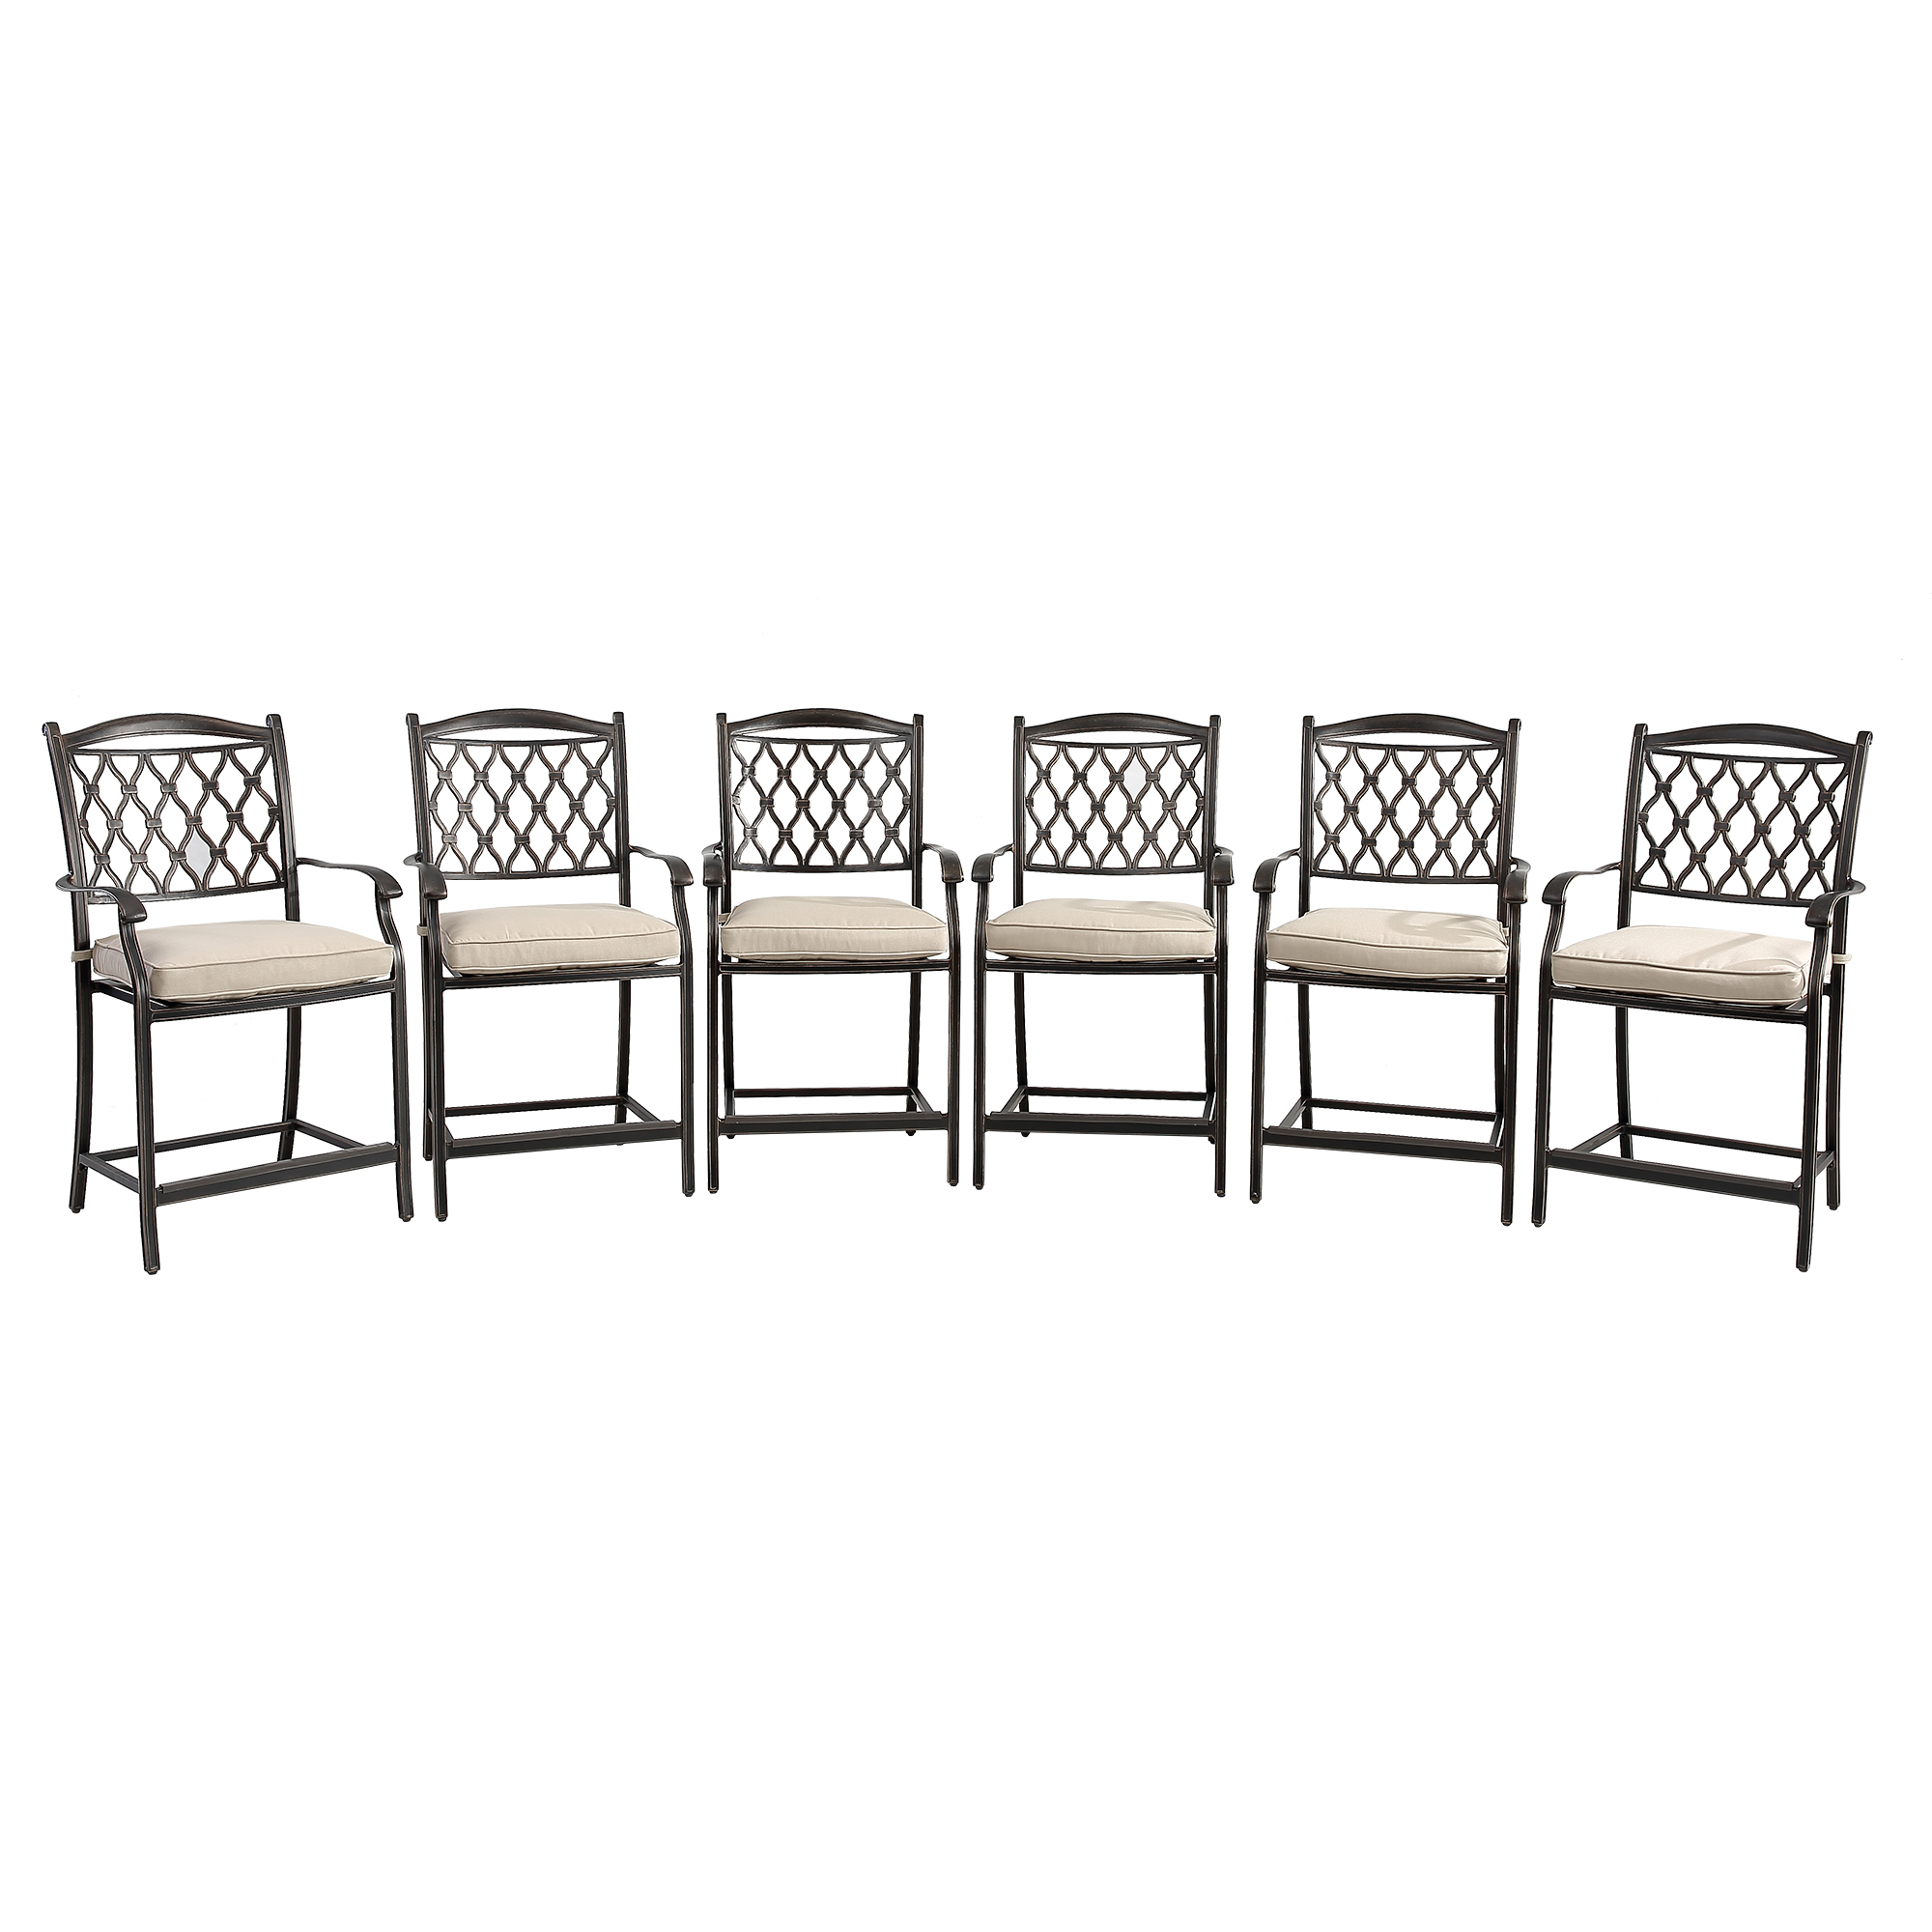 Mondawe 6 Pieces Cast Aluminum Diamond-Mesh Curved Backrest Dining Bar High Chairs in Orange/beige-Mondawe